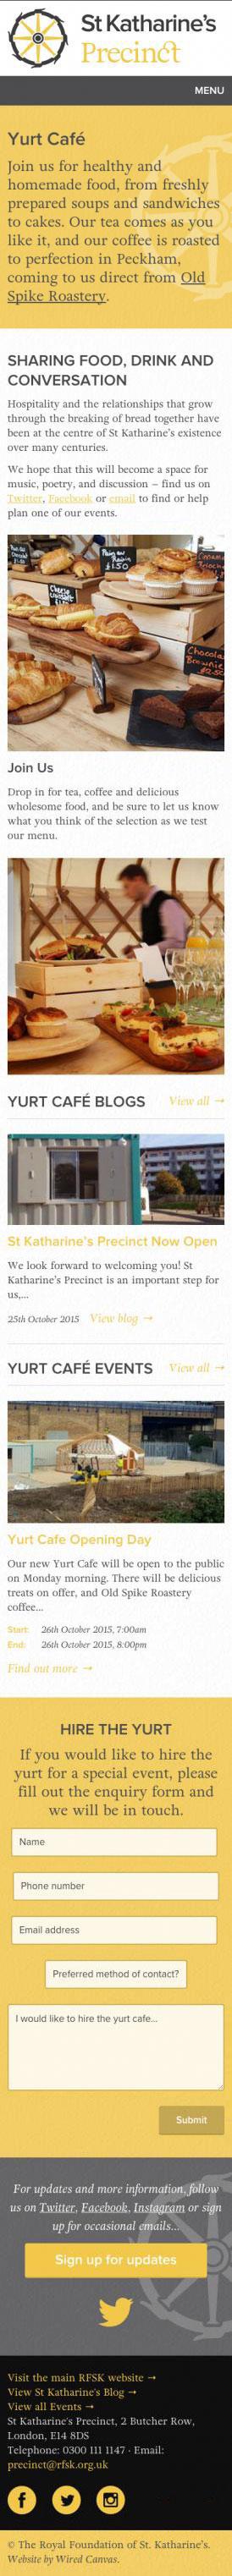 St Katharine's Precinct Mobile Website Design